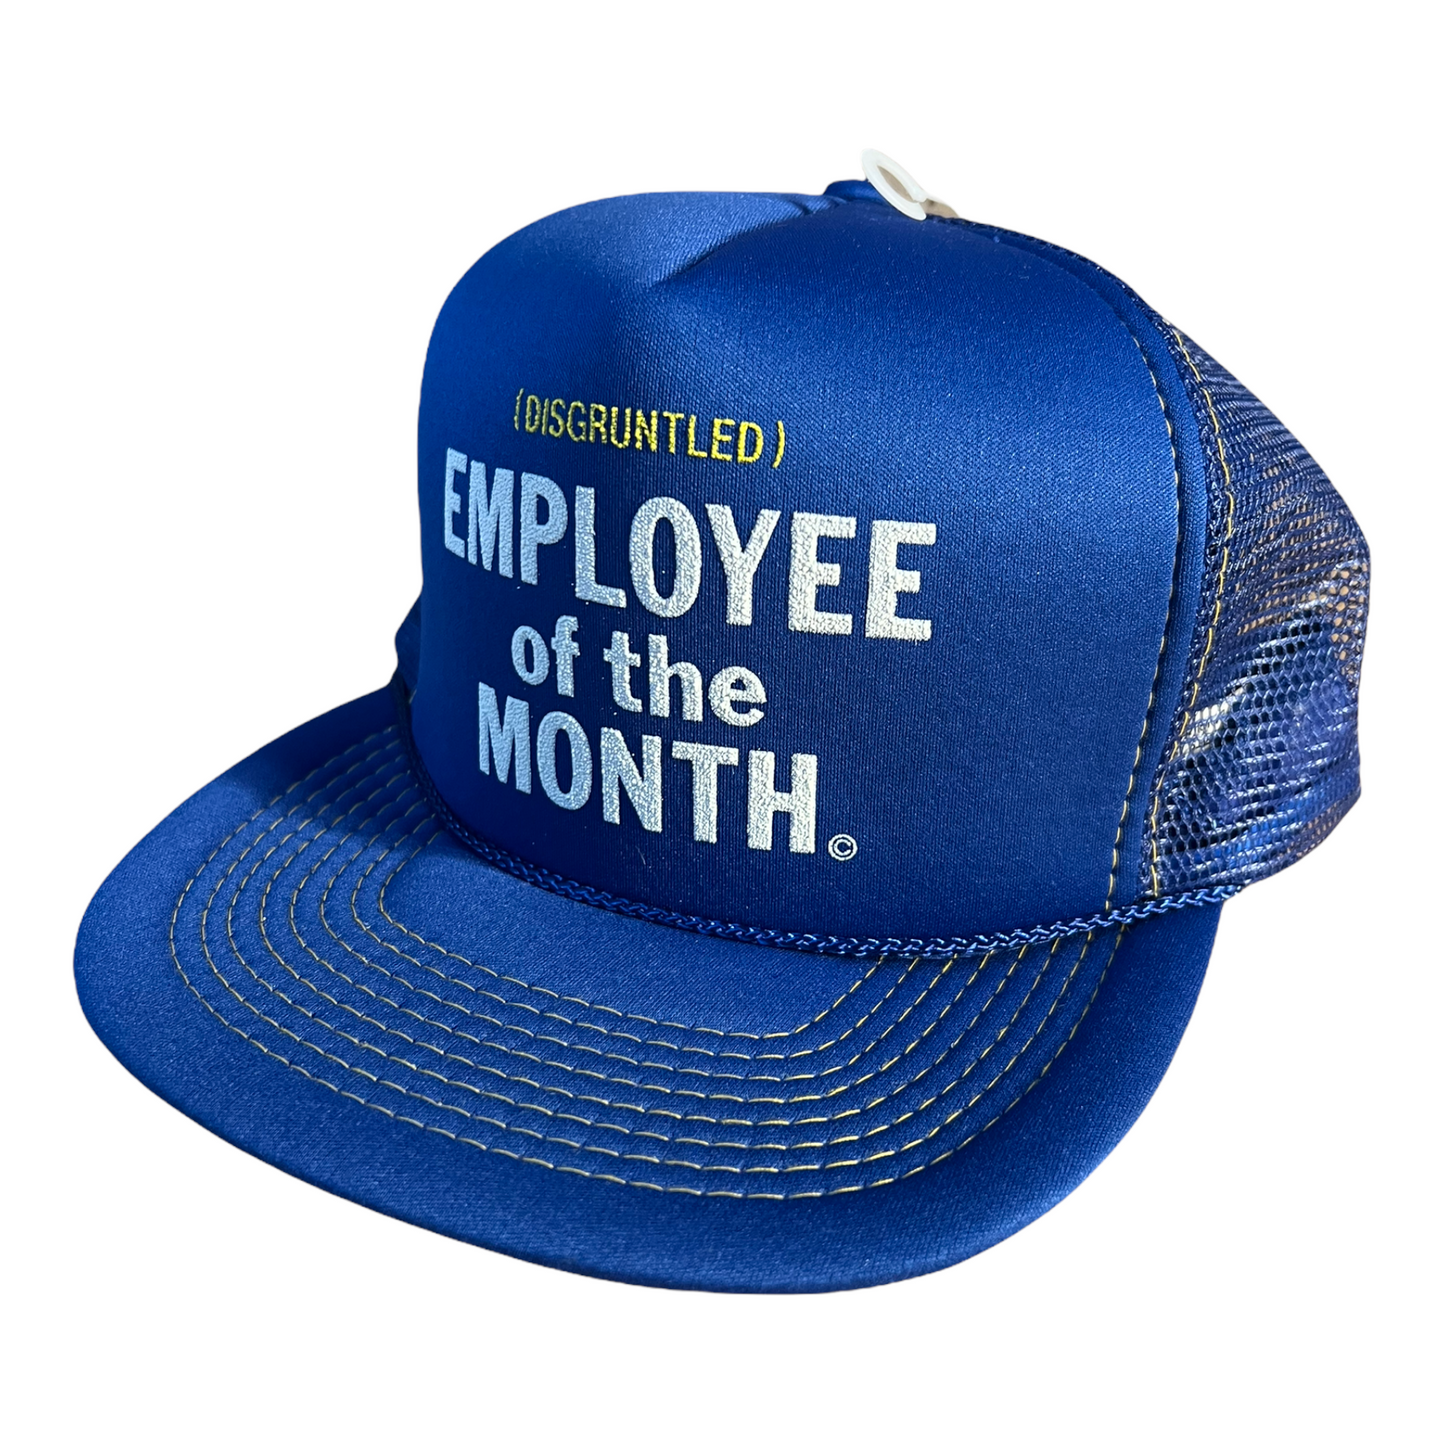 Employee Of The Month Disgruntled Trucker Hat Funny Trucker Hat Blue